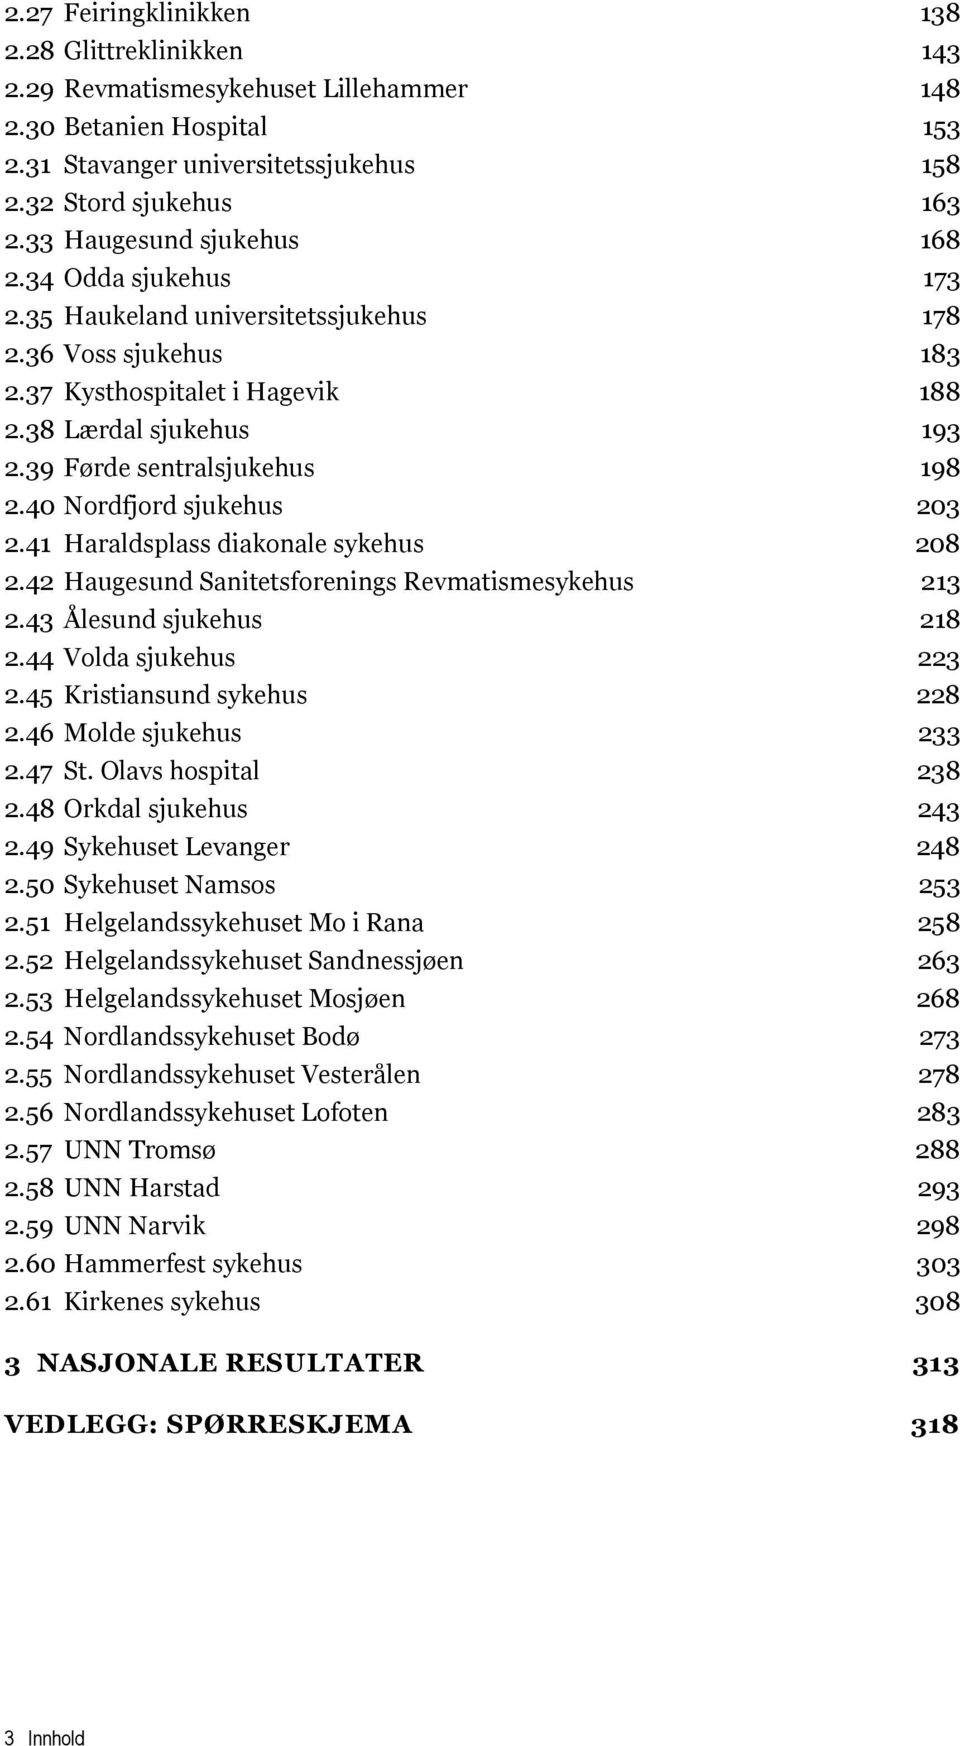 39 Førde sentralsjukehus 198 2.40 Nordfjord sjukehus 203 2.41 Haraldsplass diakonale sykehus 208 2.42 Haugesund Sanitetsforenings Revmatismesykehus 213 2.43 Ålesund sjukehus 218 2.